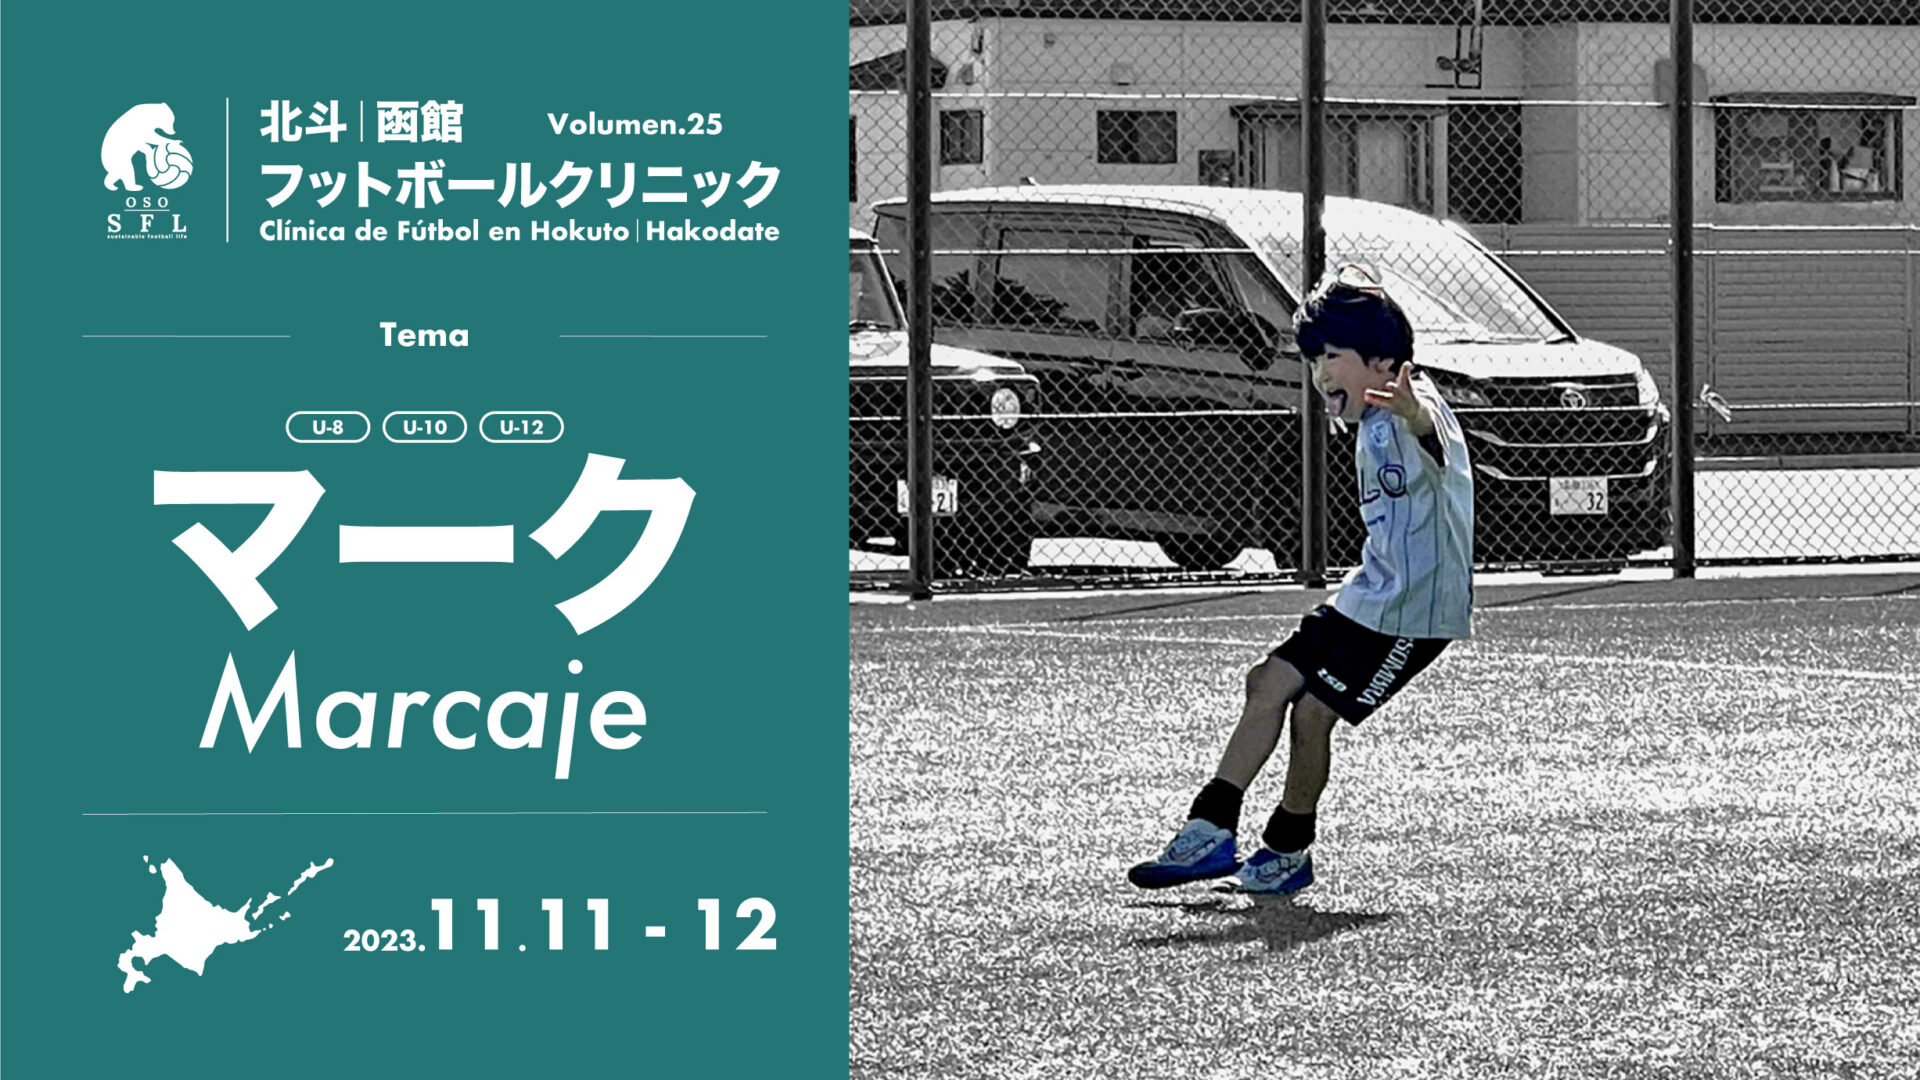 20231017_notice-hokuto-hakodate-football-clinic-2023-vol25_1920px